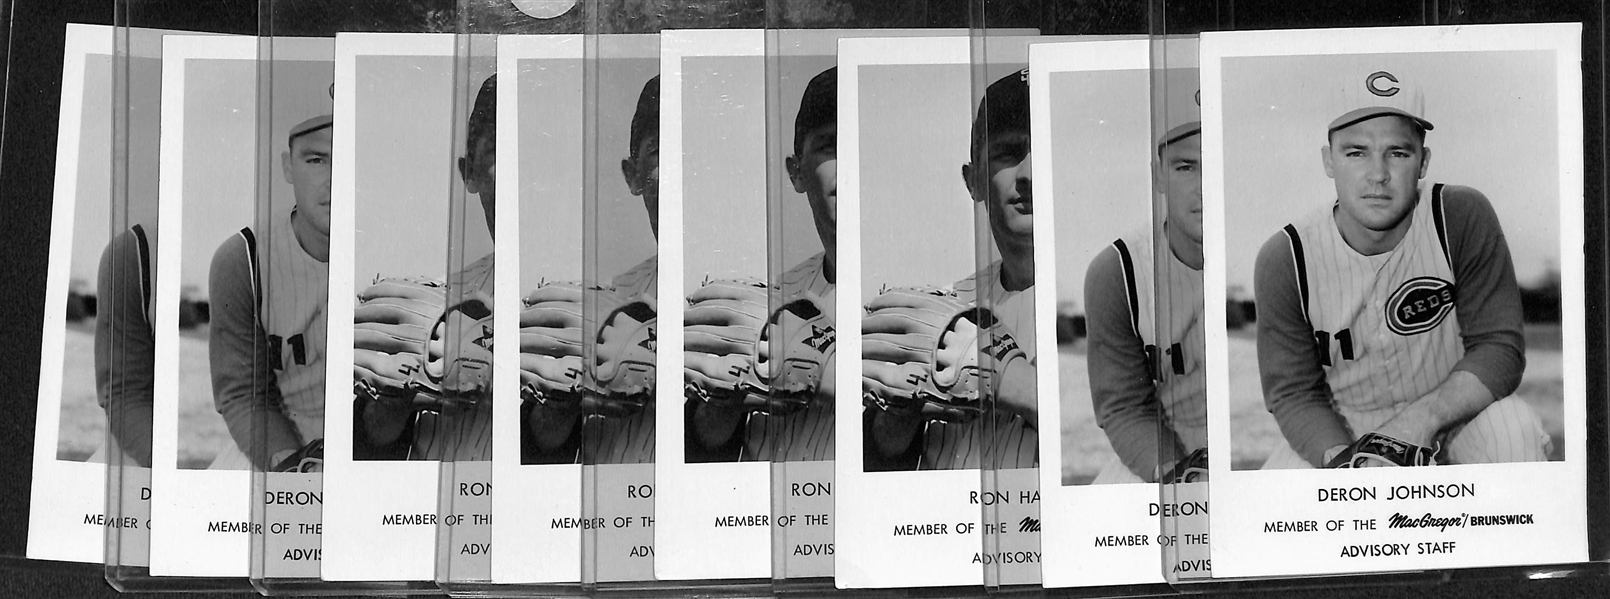 RARE Lot of (8) 1965 MacGregor/Brunswick Advisory Staff Photo Cards - 3.5x 5 - Includes (4) Ron Hansen and (4) Deron Johnson